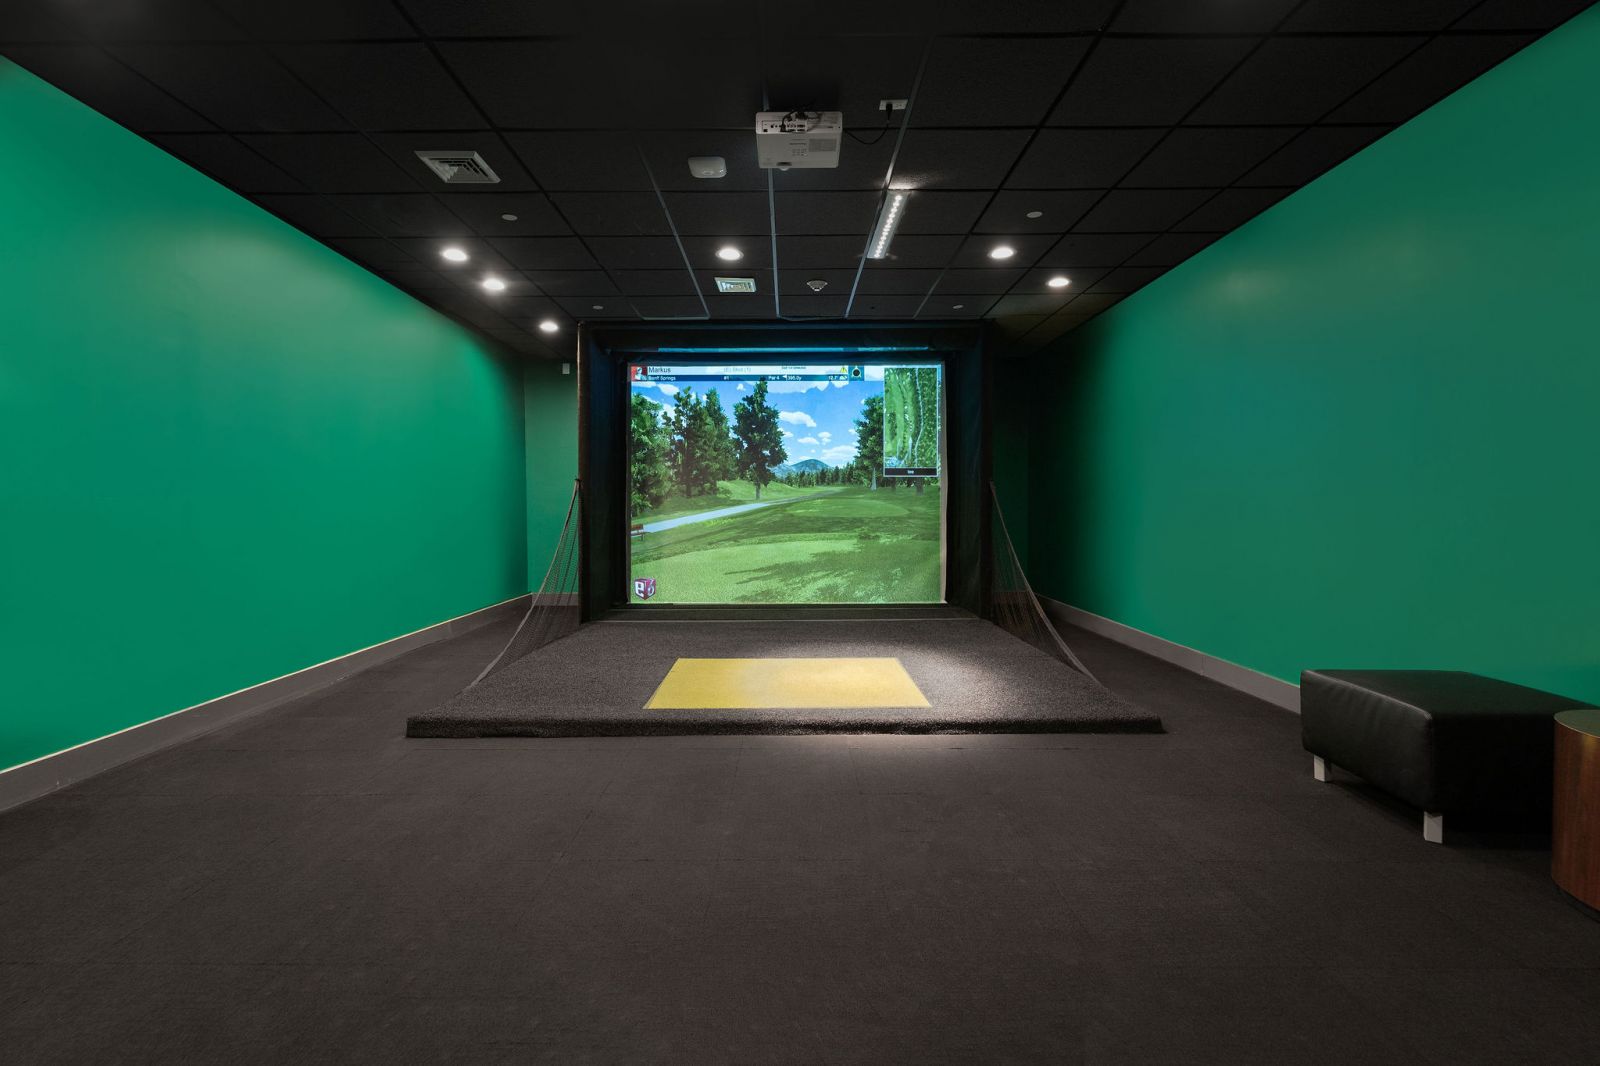 Golf simulator off campus housing in Binghamton NY